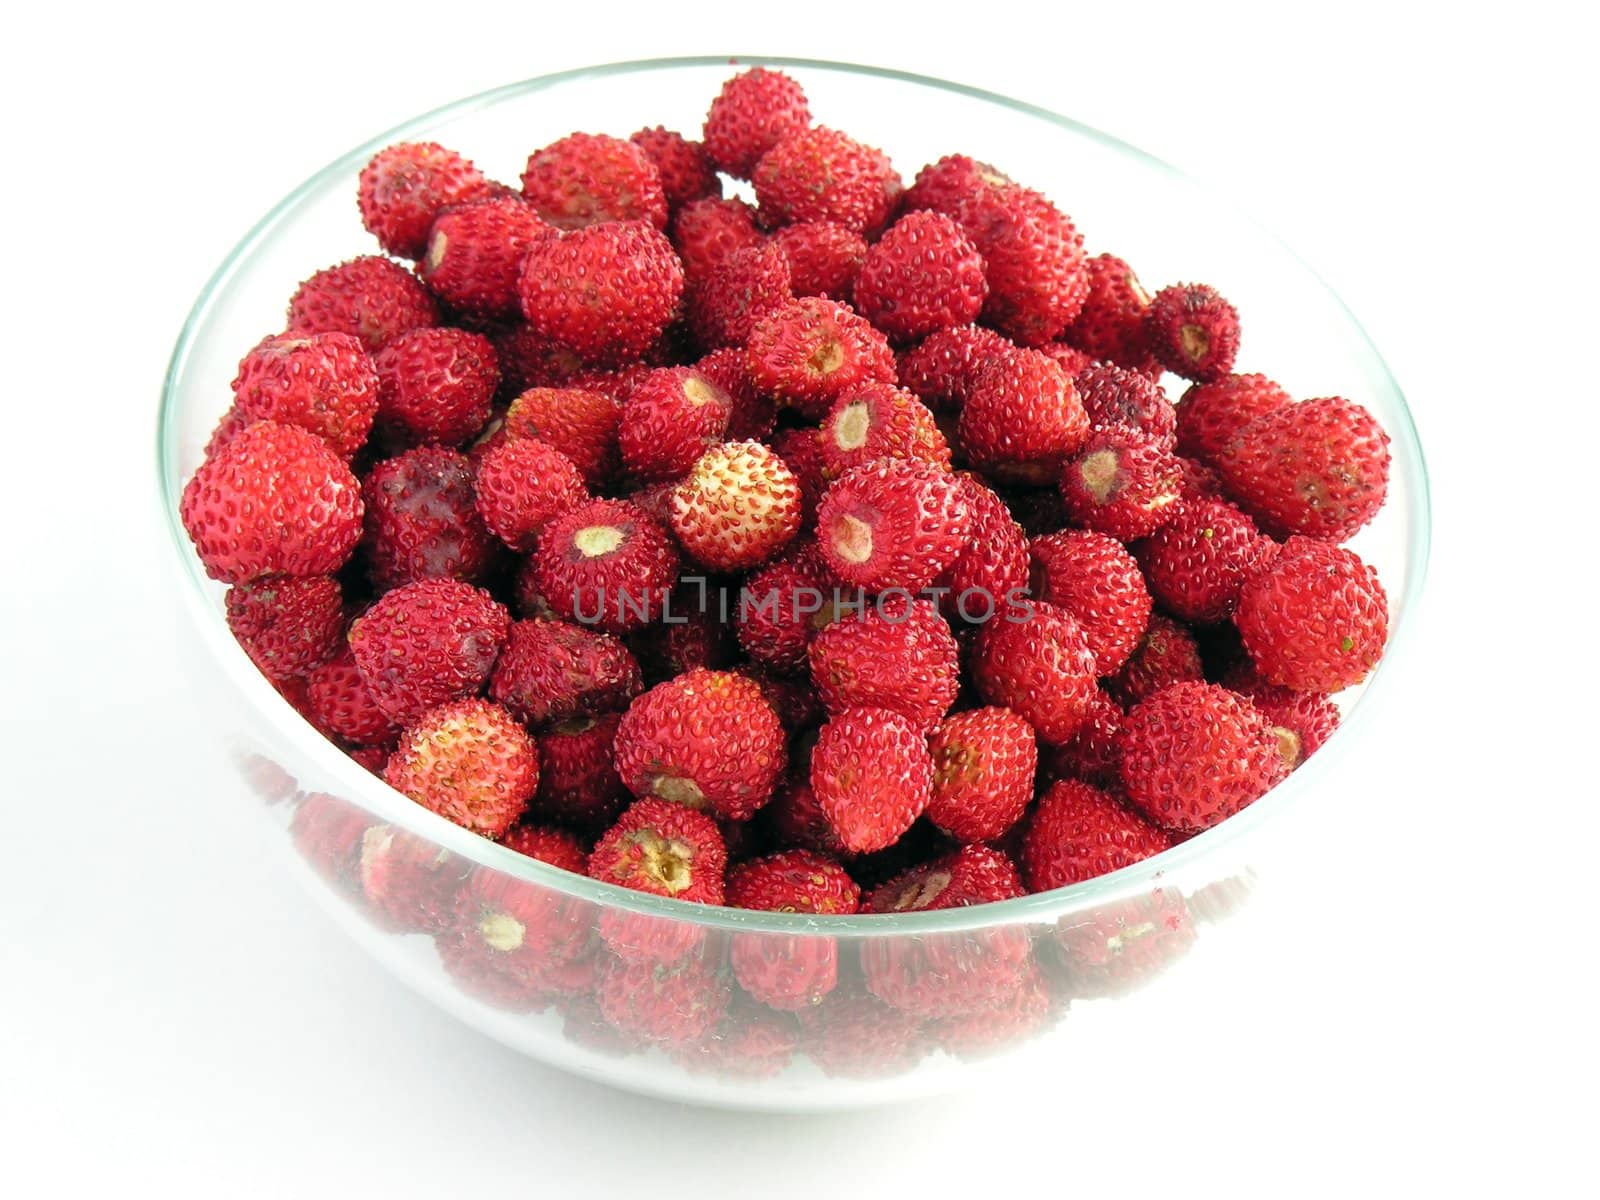 wonderful fruits of wild strawberries